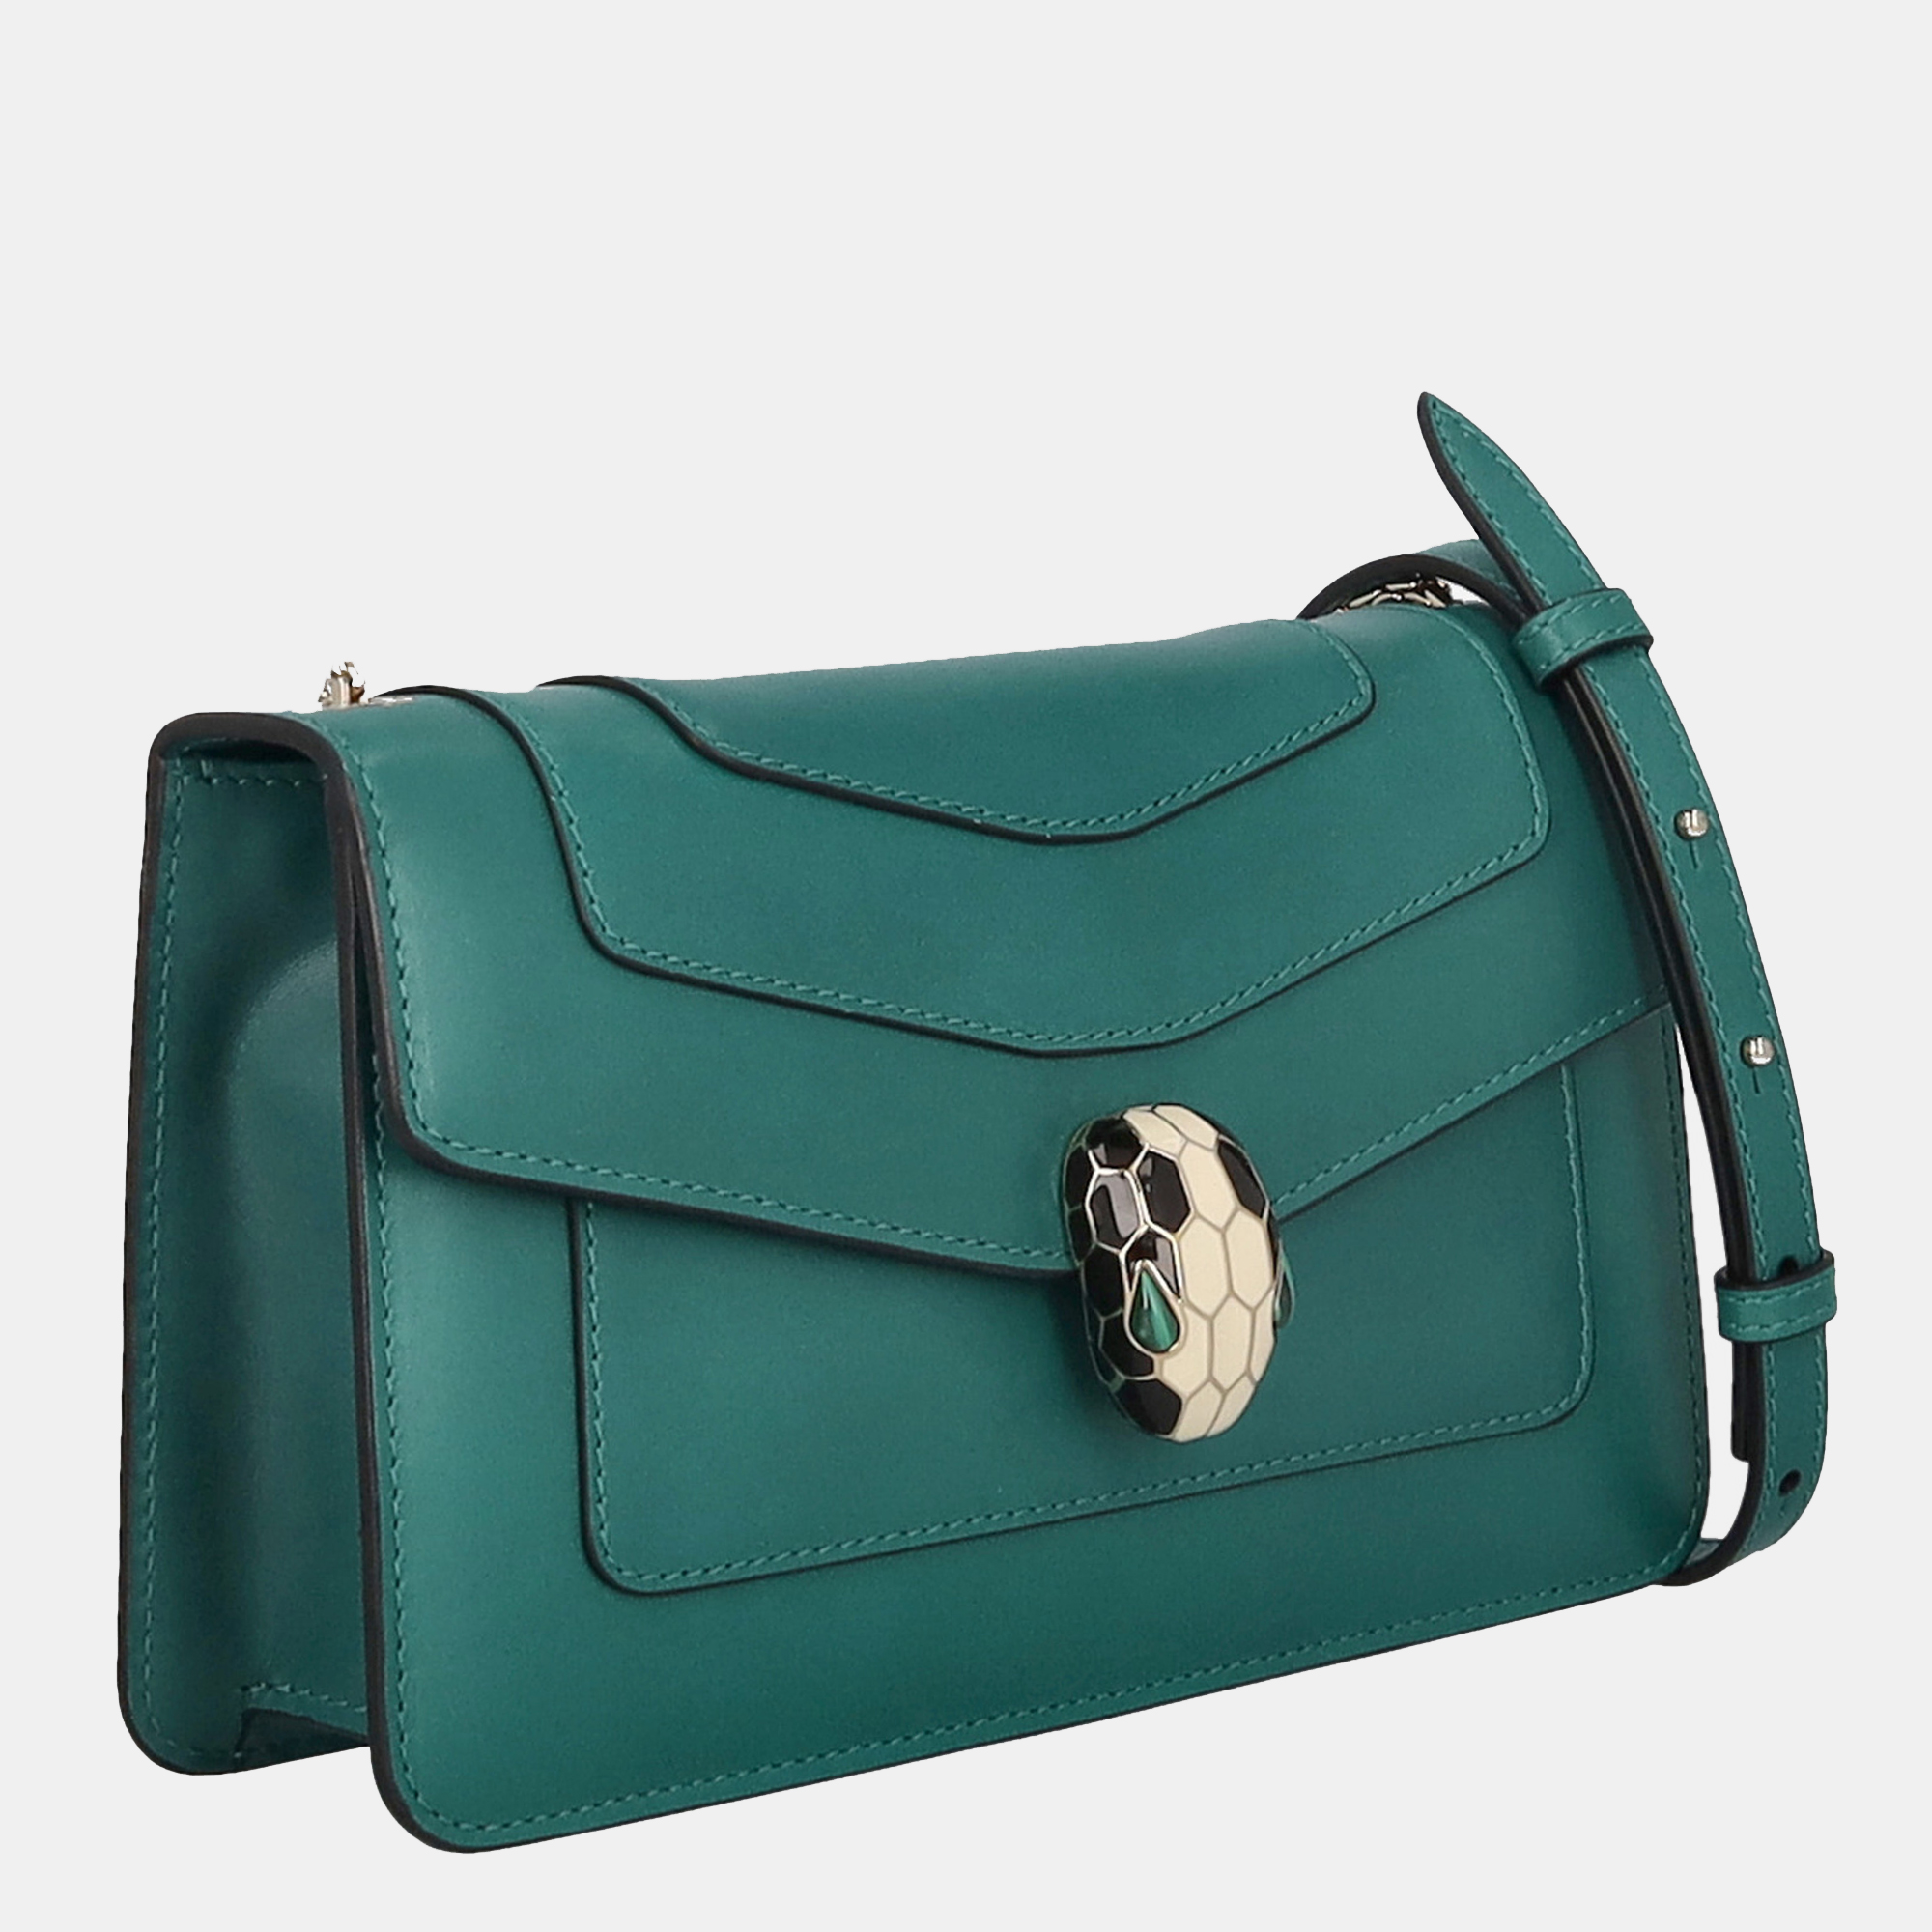 Bvlgari Serpenti - Women's Leather Shoulder Bag - Green - One Size